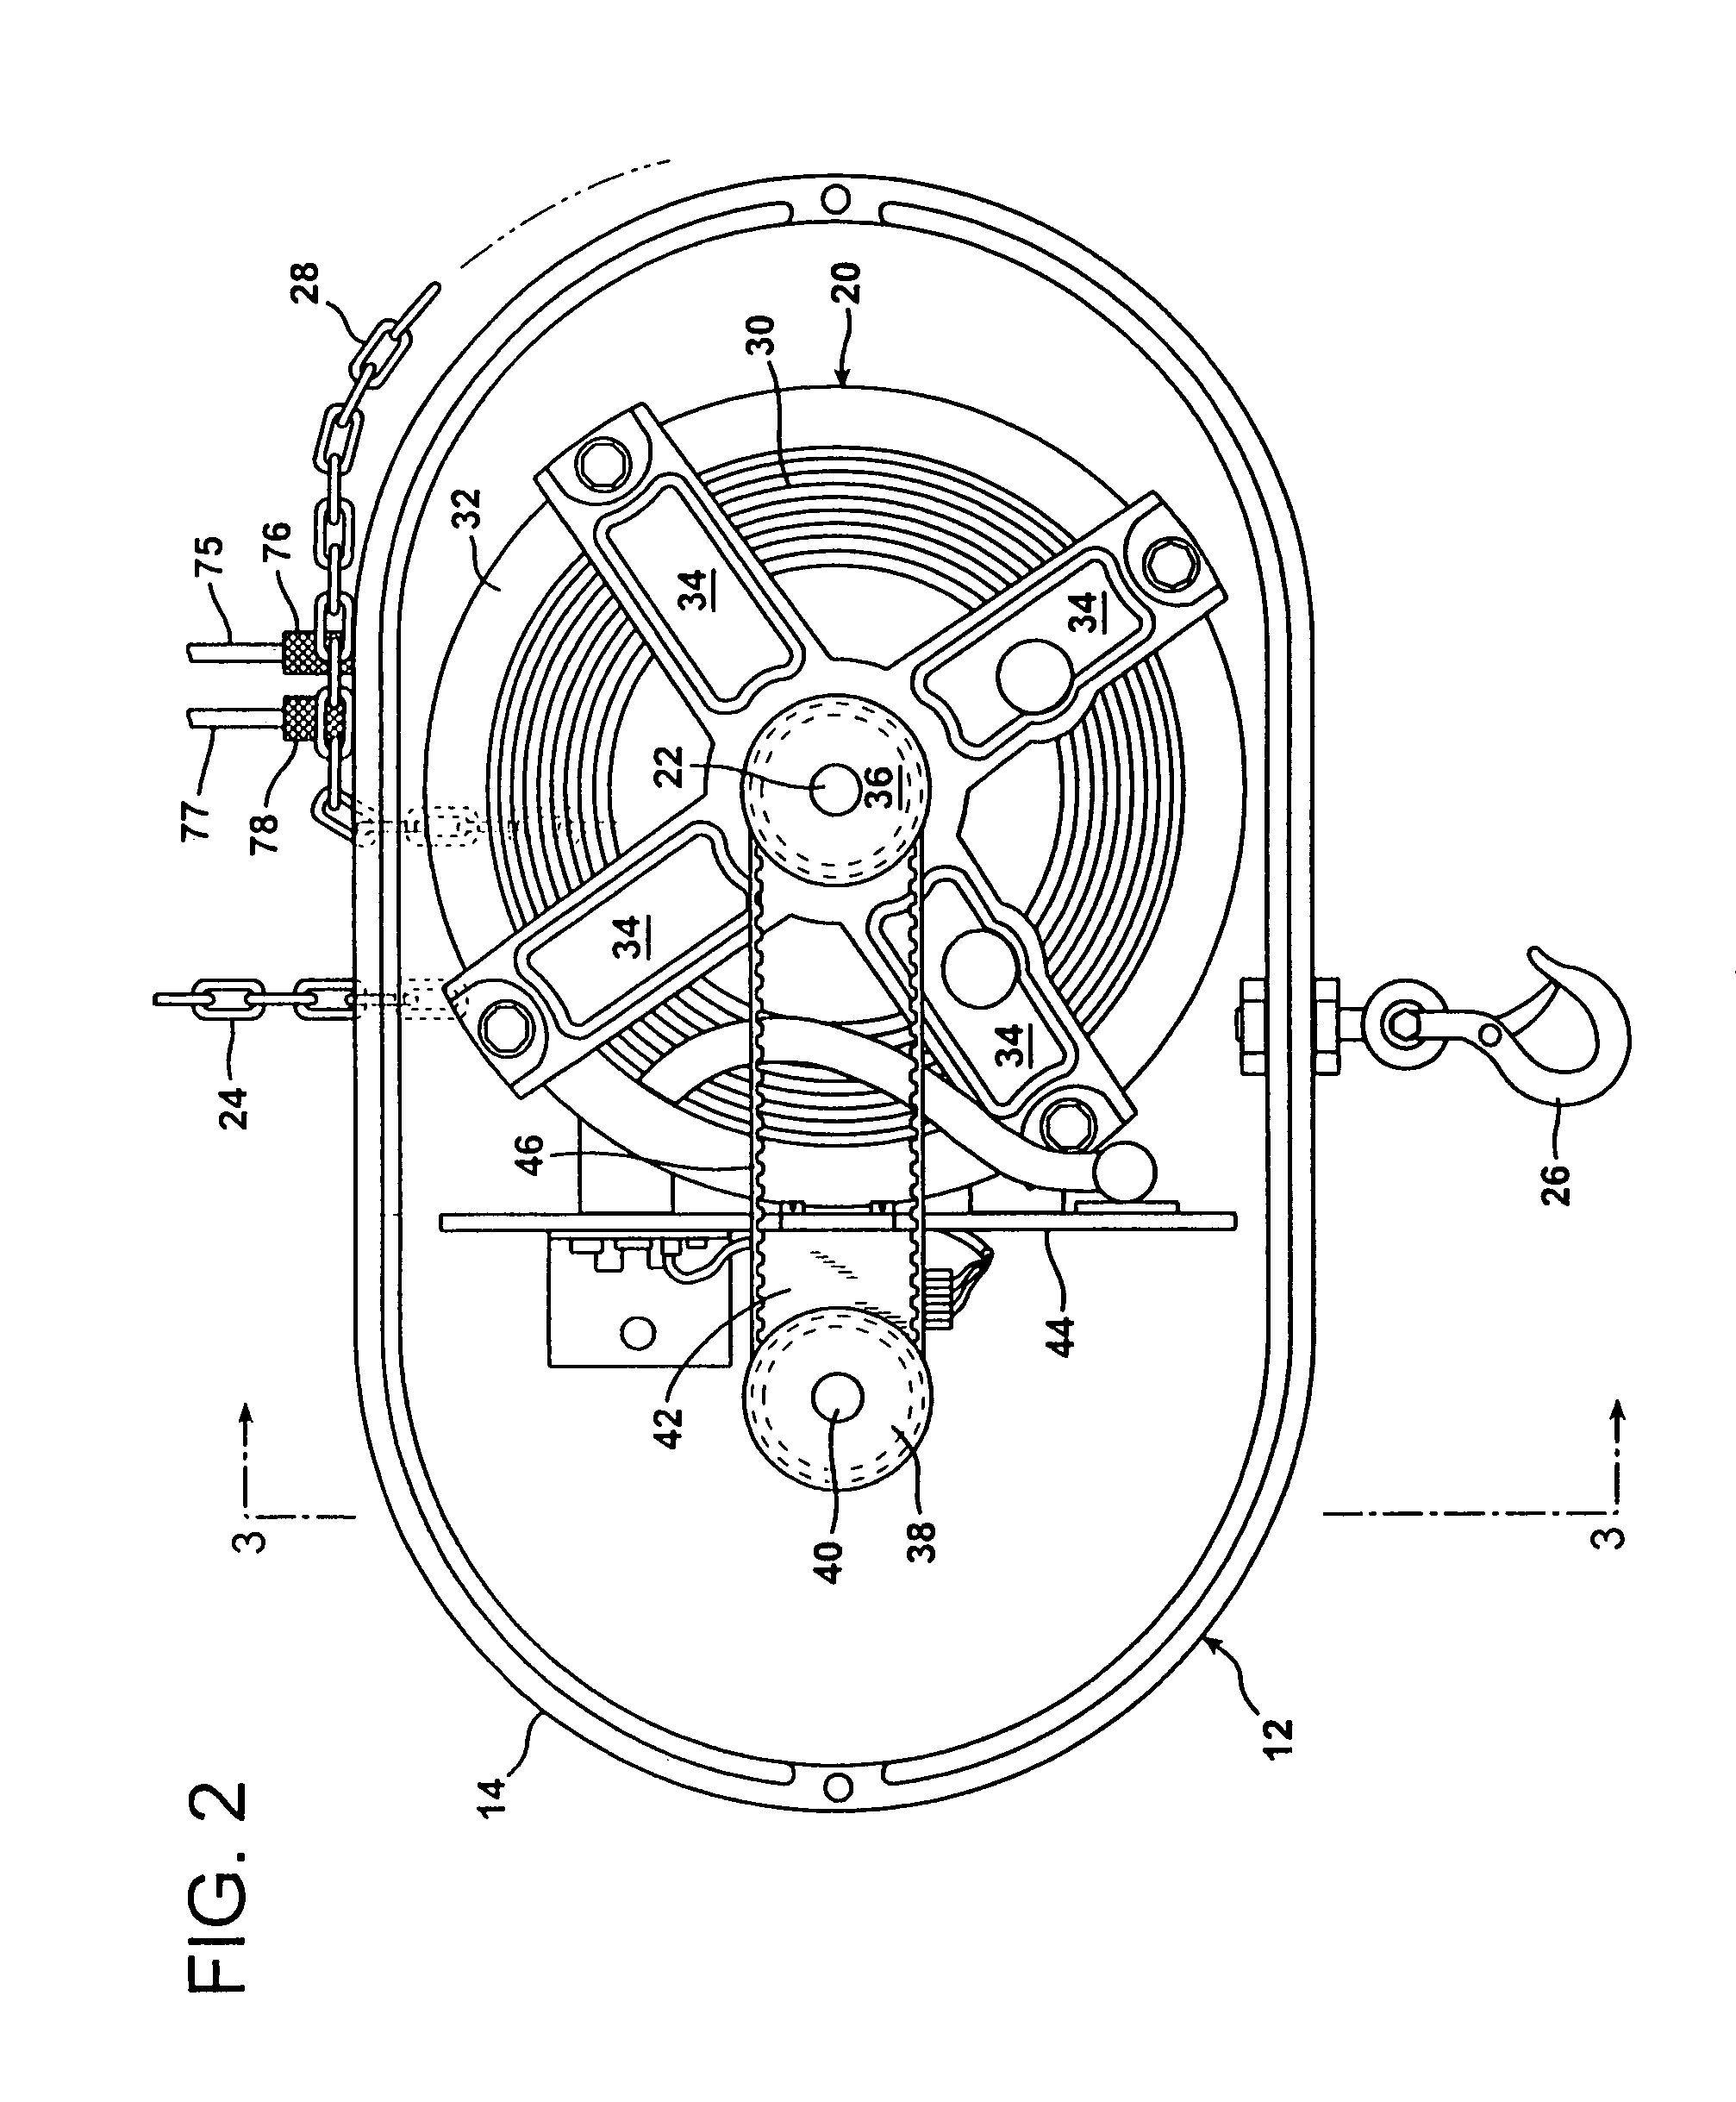 Chain motor drive controller